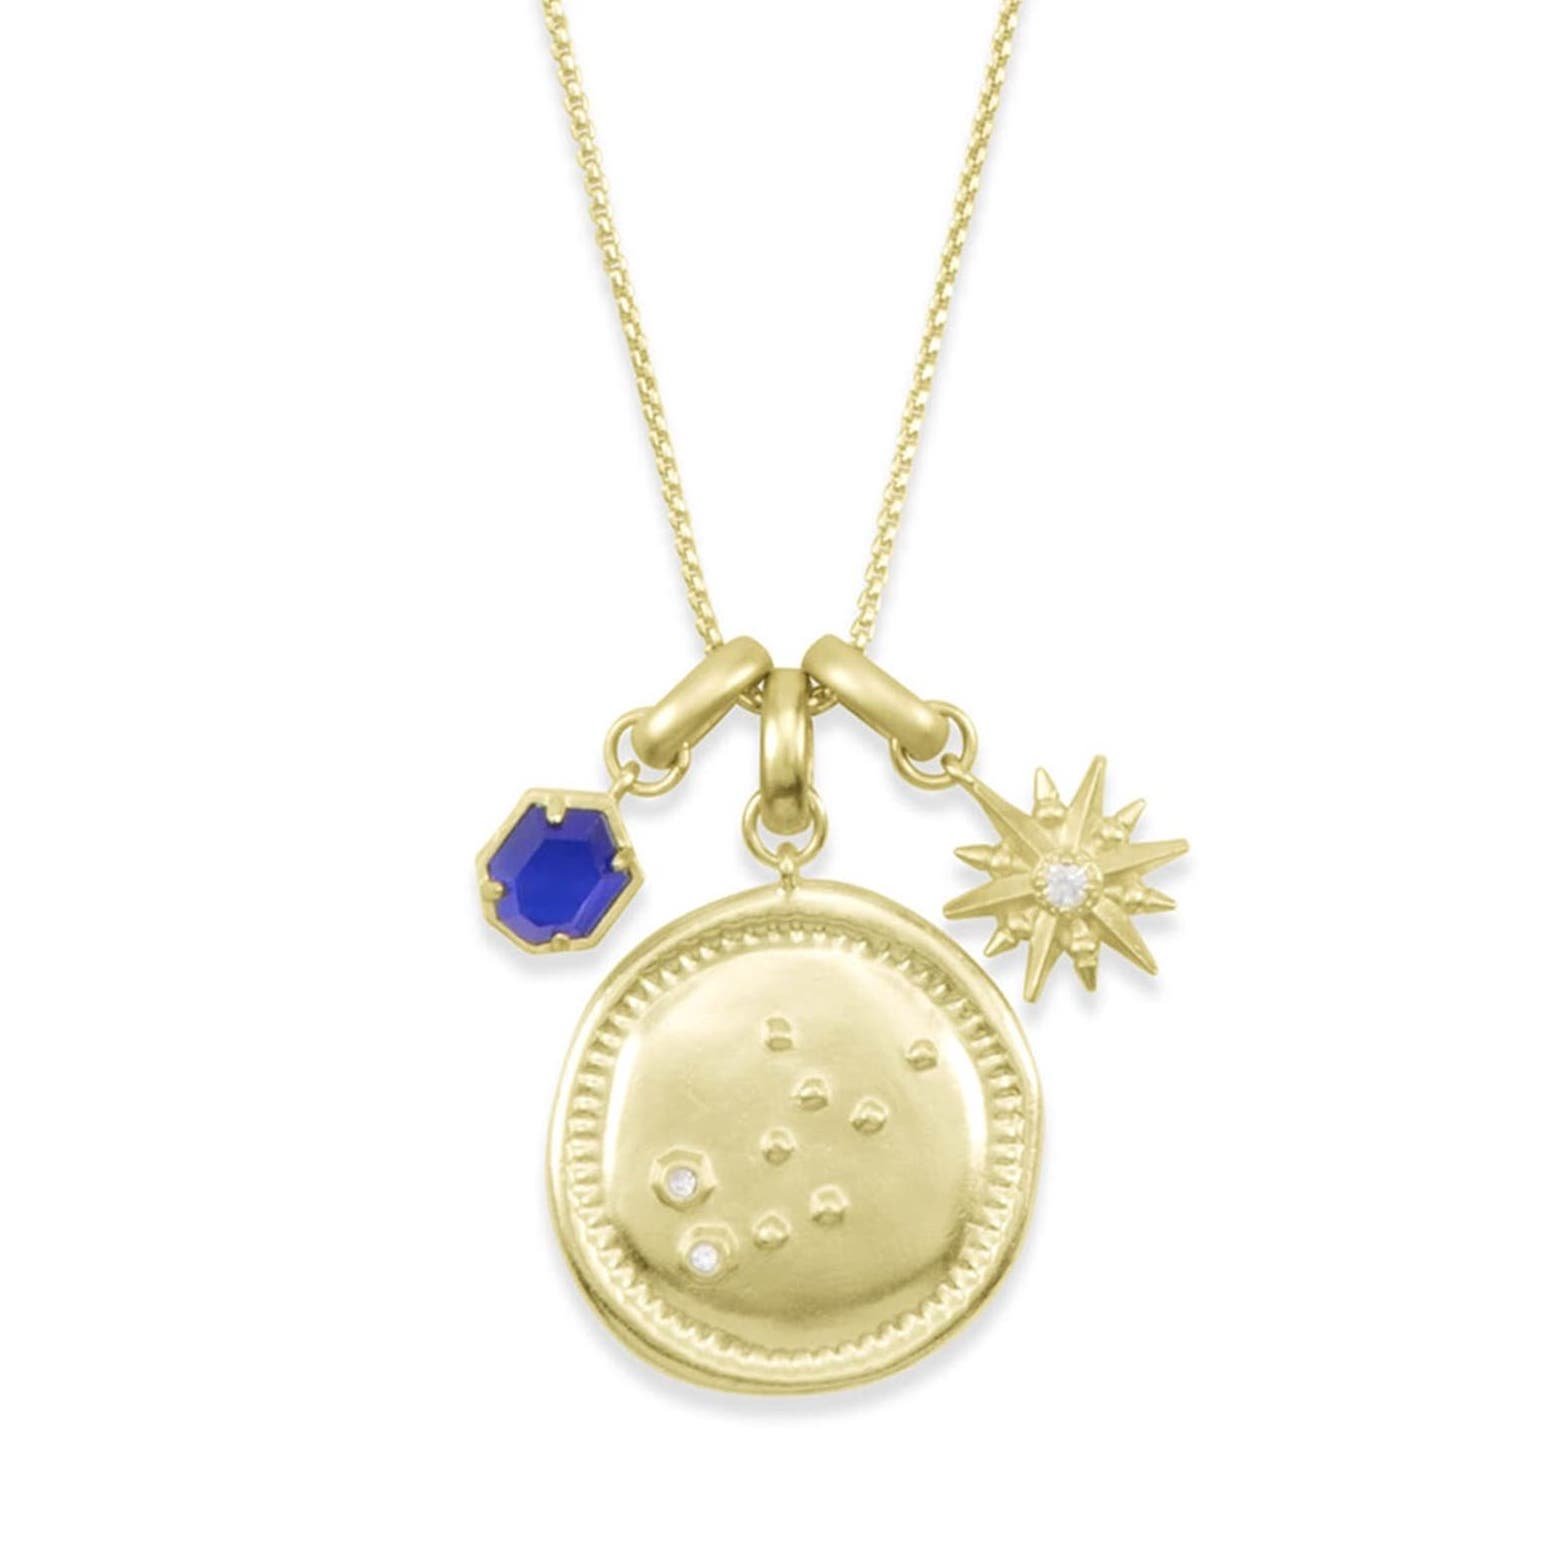 Kendra Scott Gold Libra Charm Necklace, $37. 46 (originally $120) at Nordstrom Rack